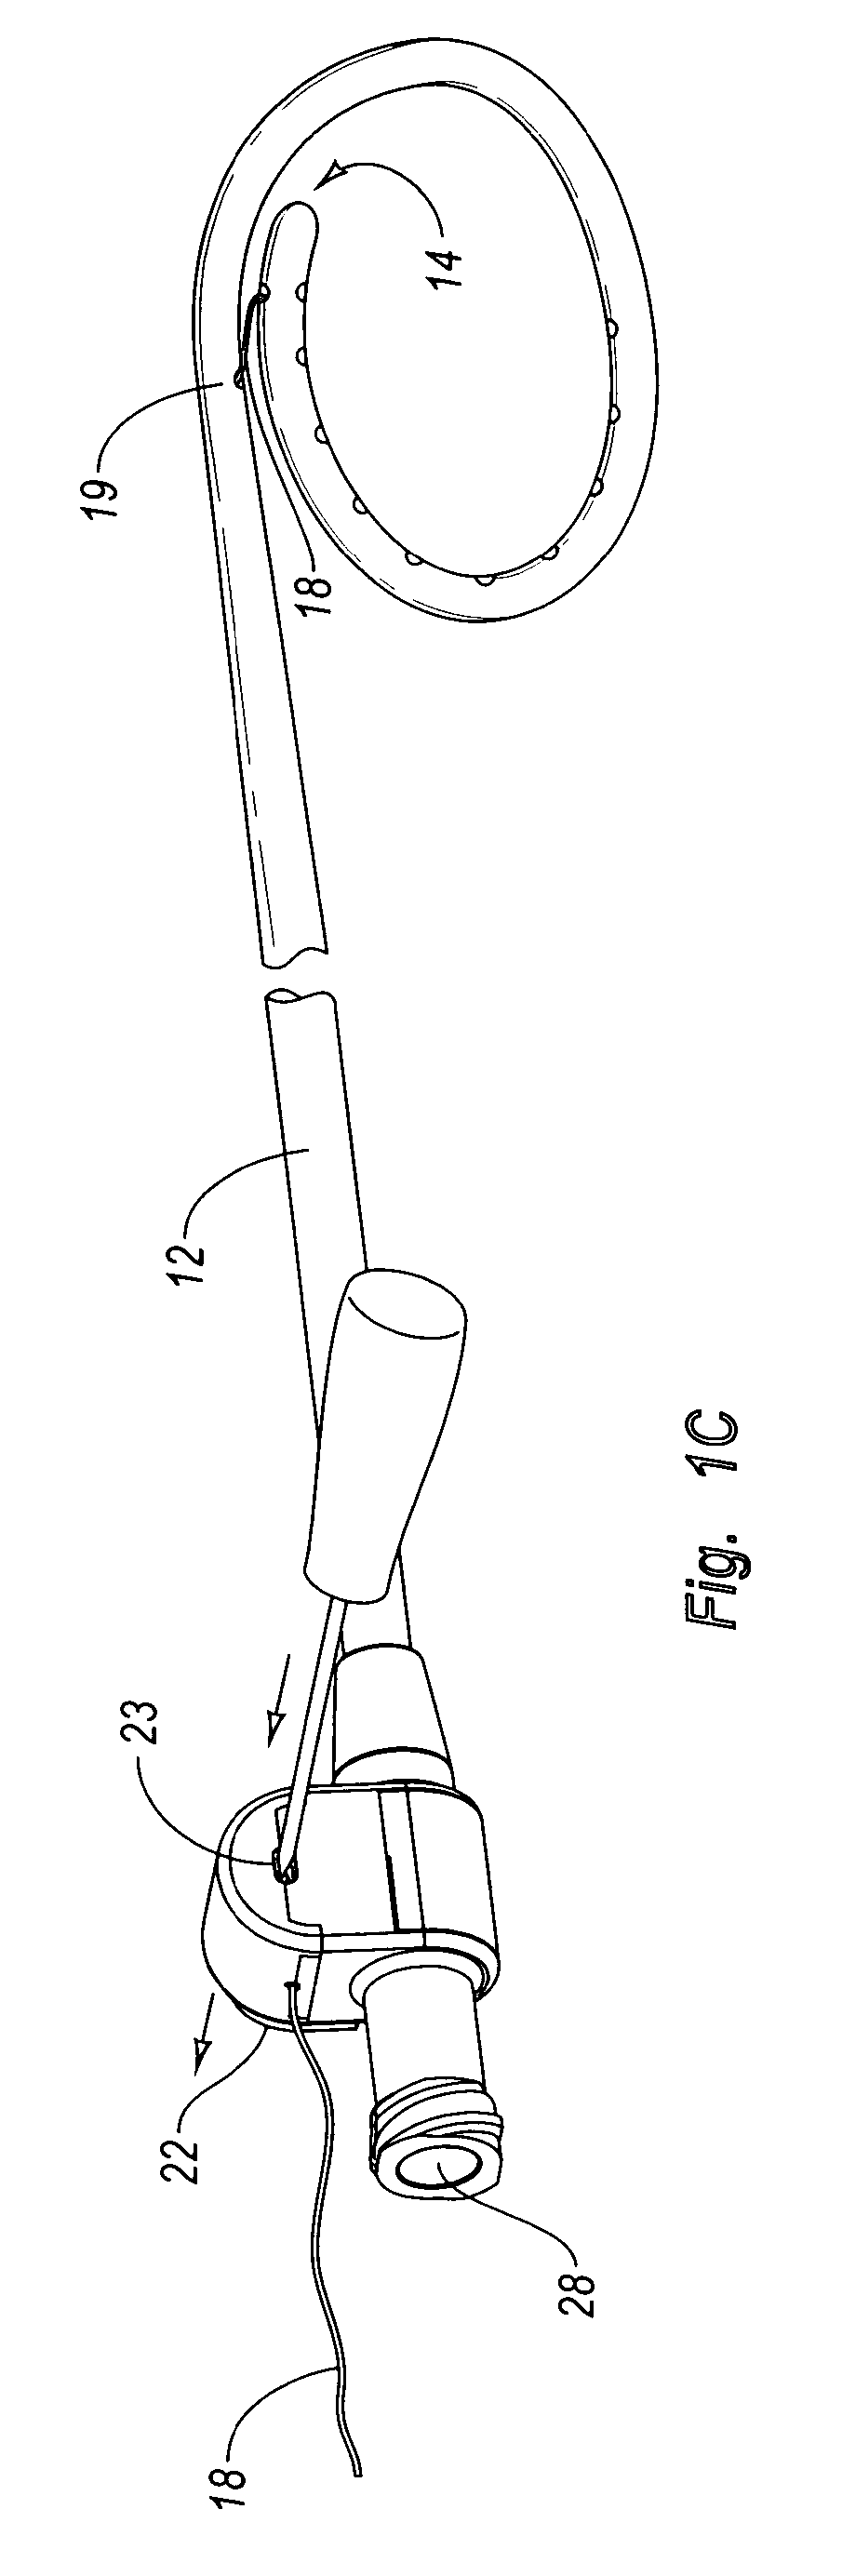 Drainage catheter with lockable hub